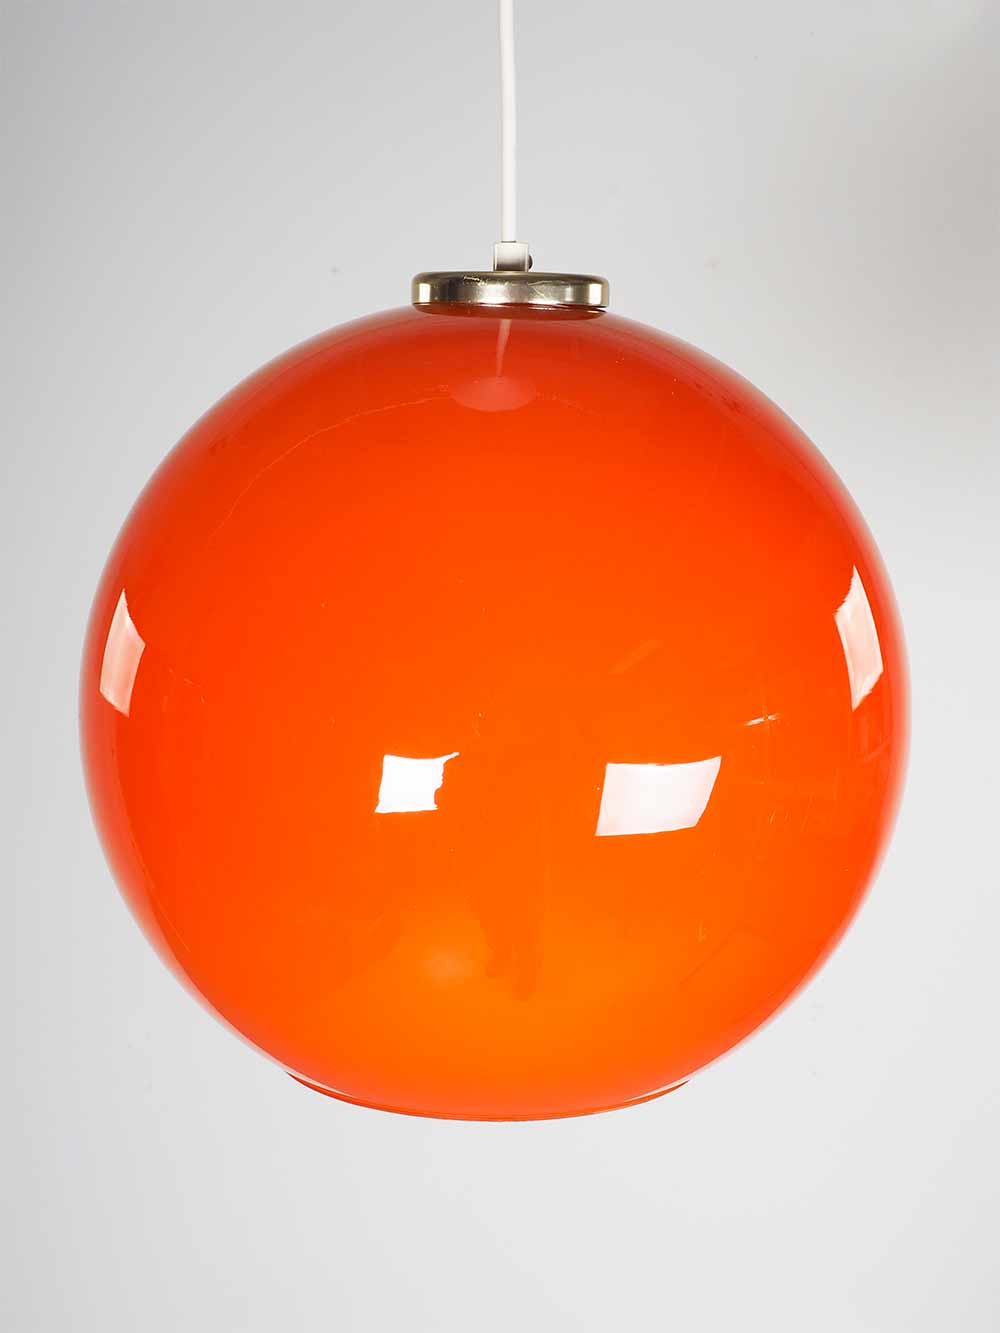 Orange glass pendant